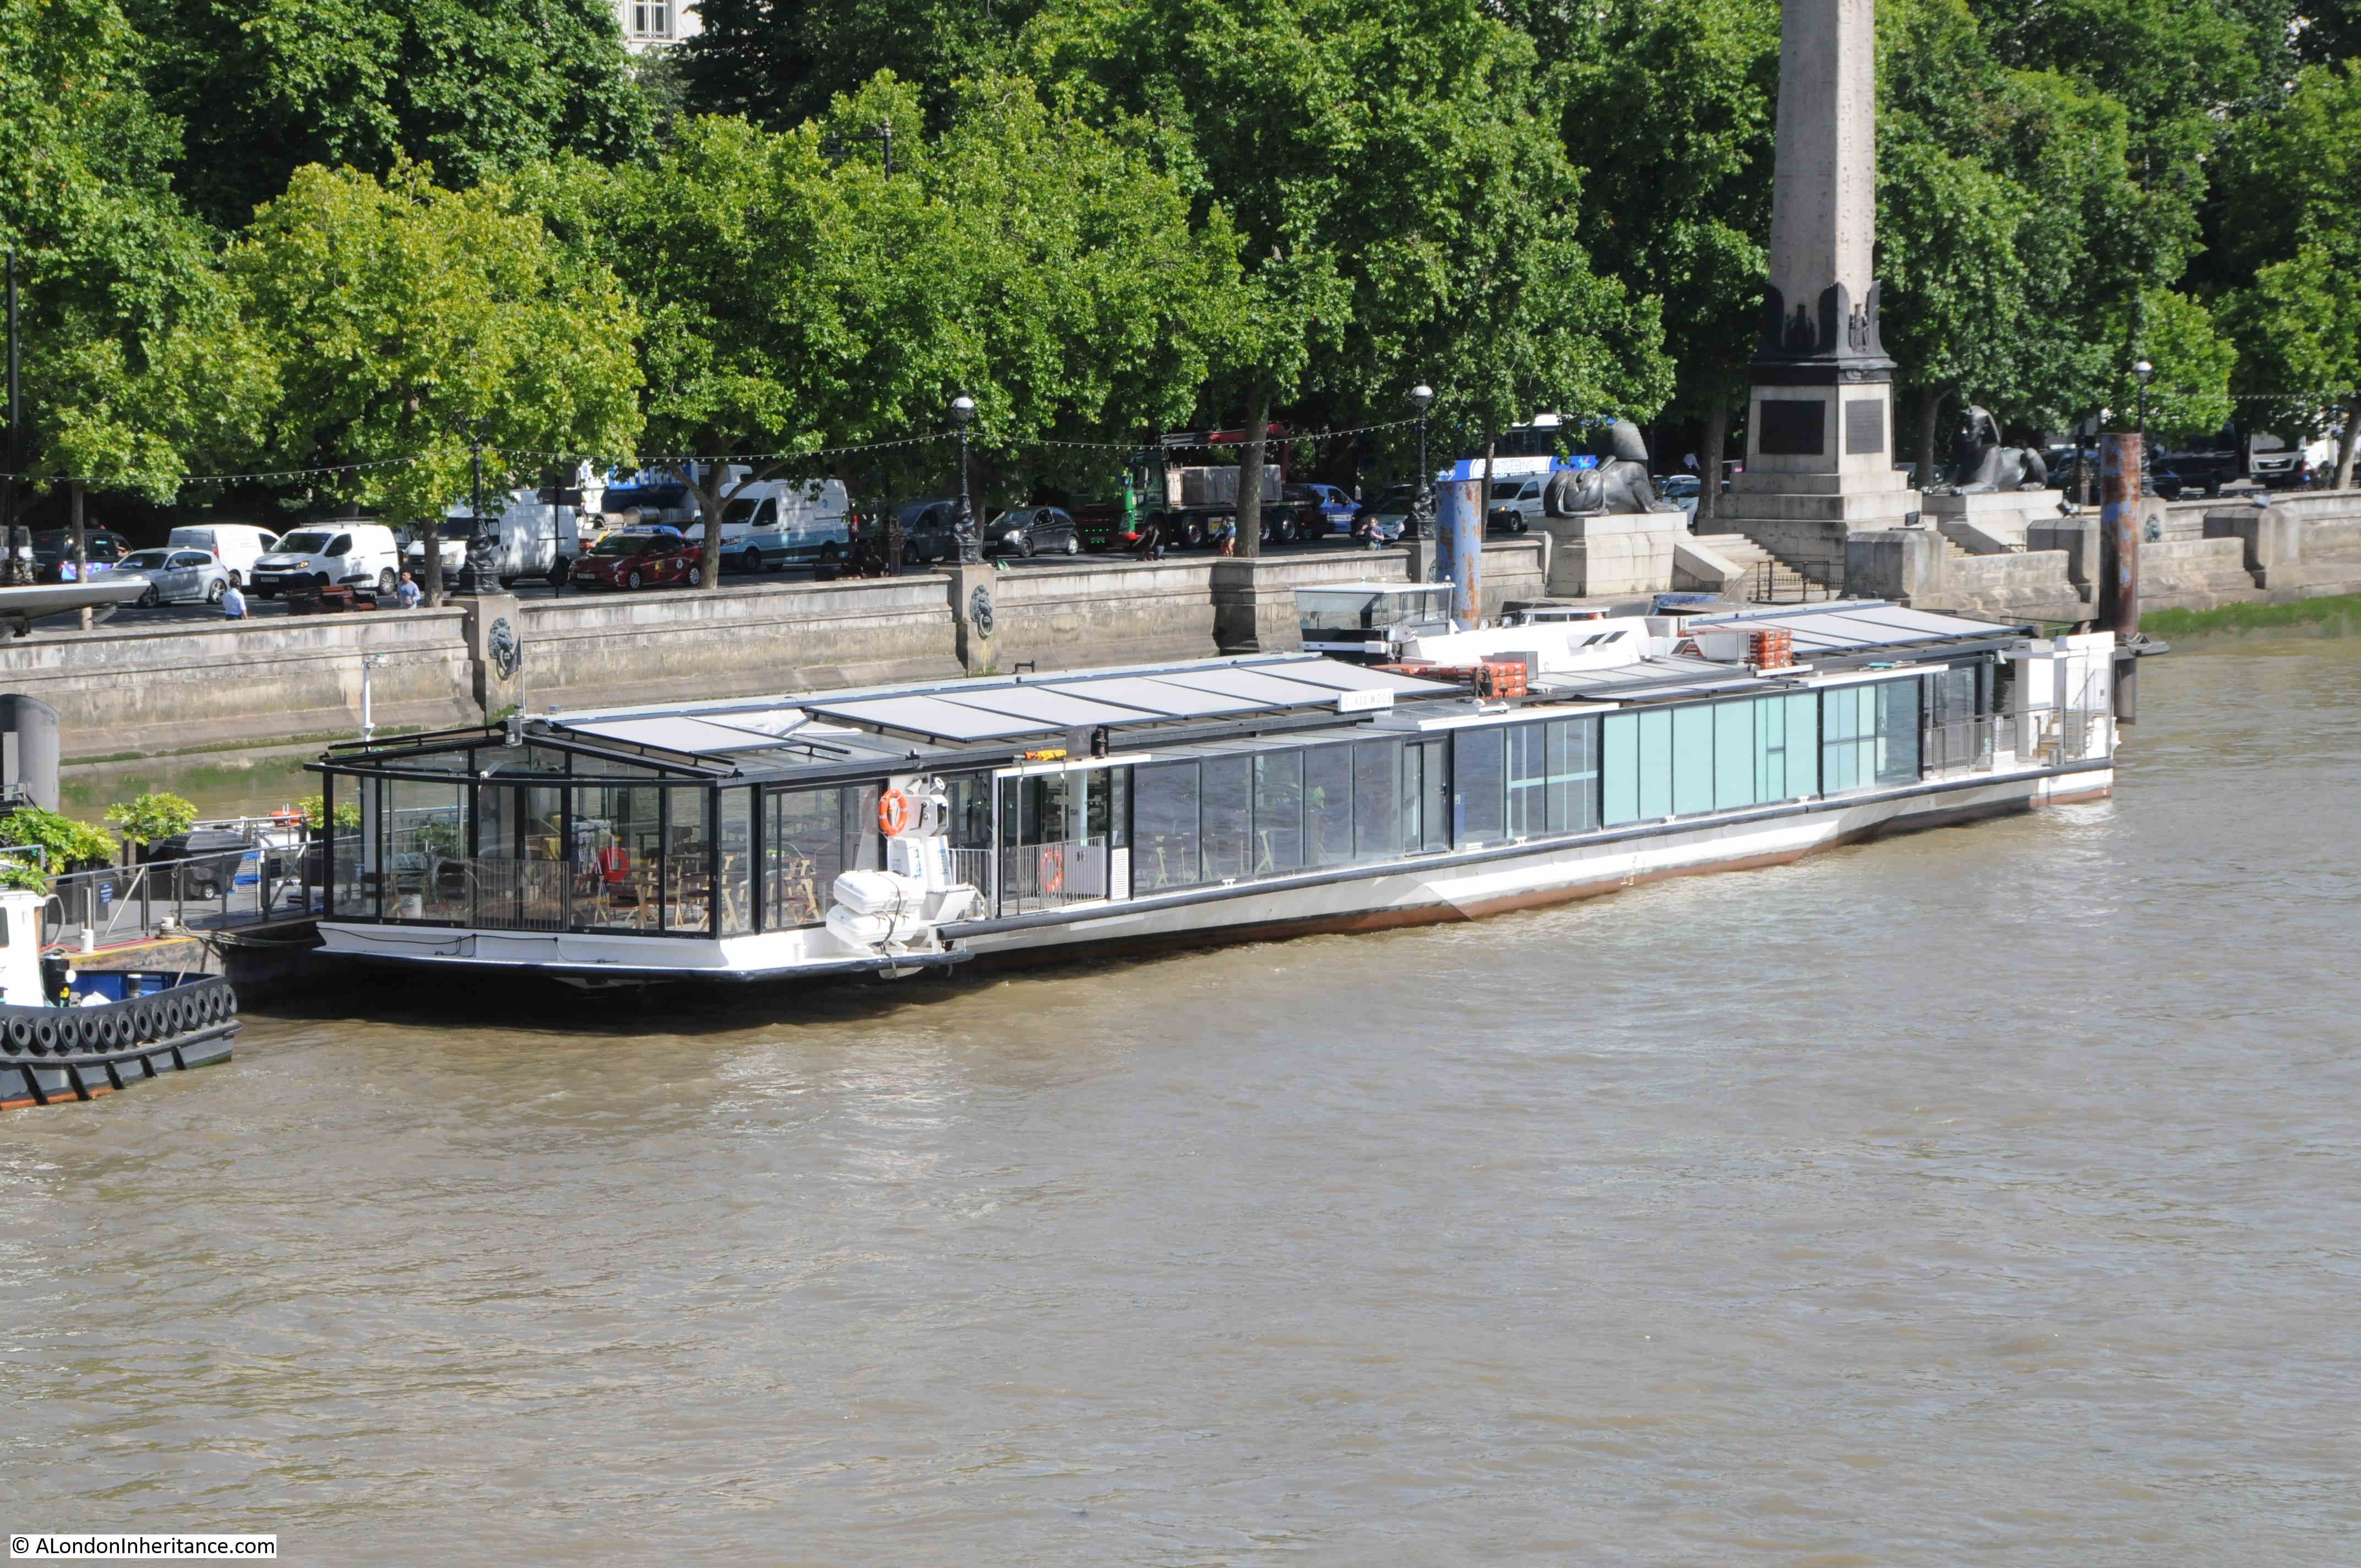 Pleasure boats on the Thames